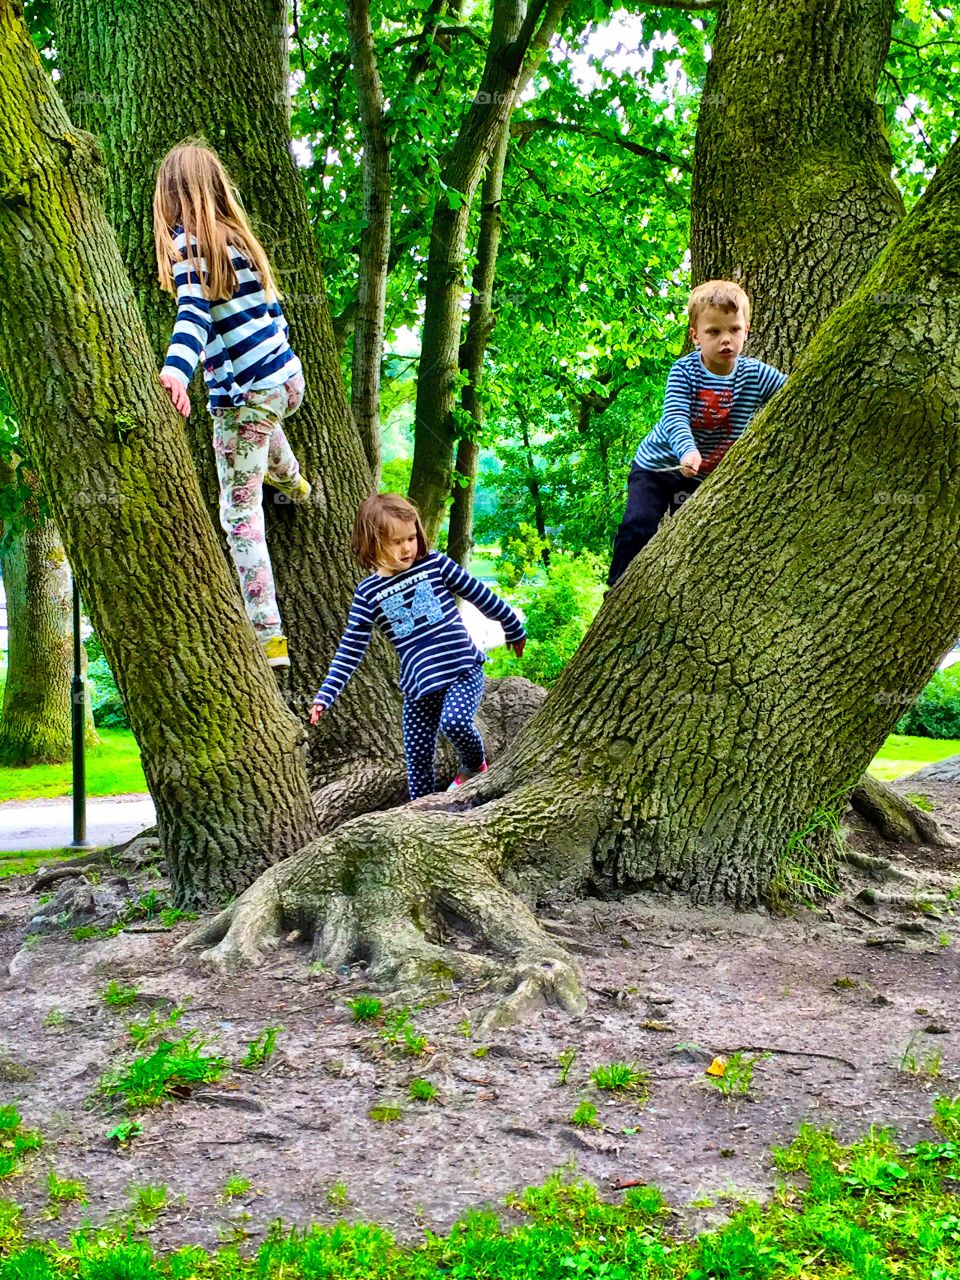 Group of kids climbing on tree